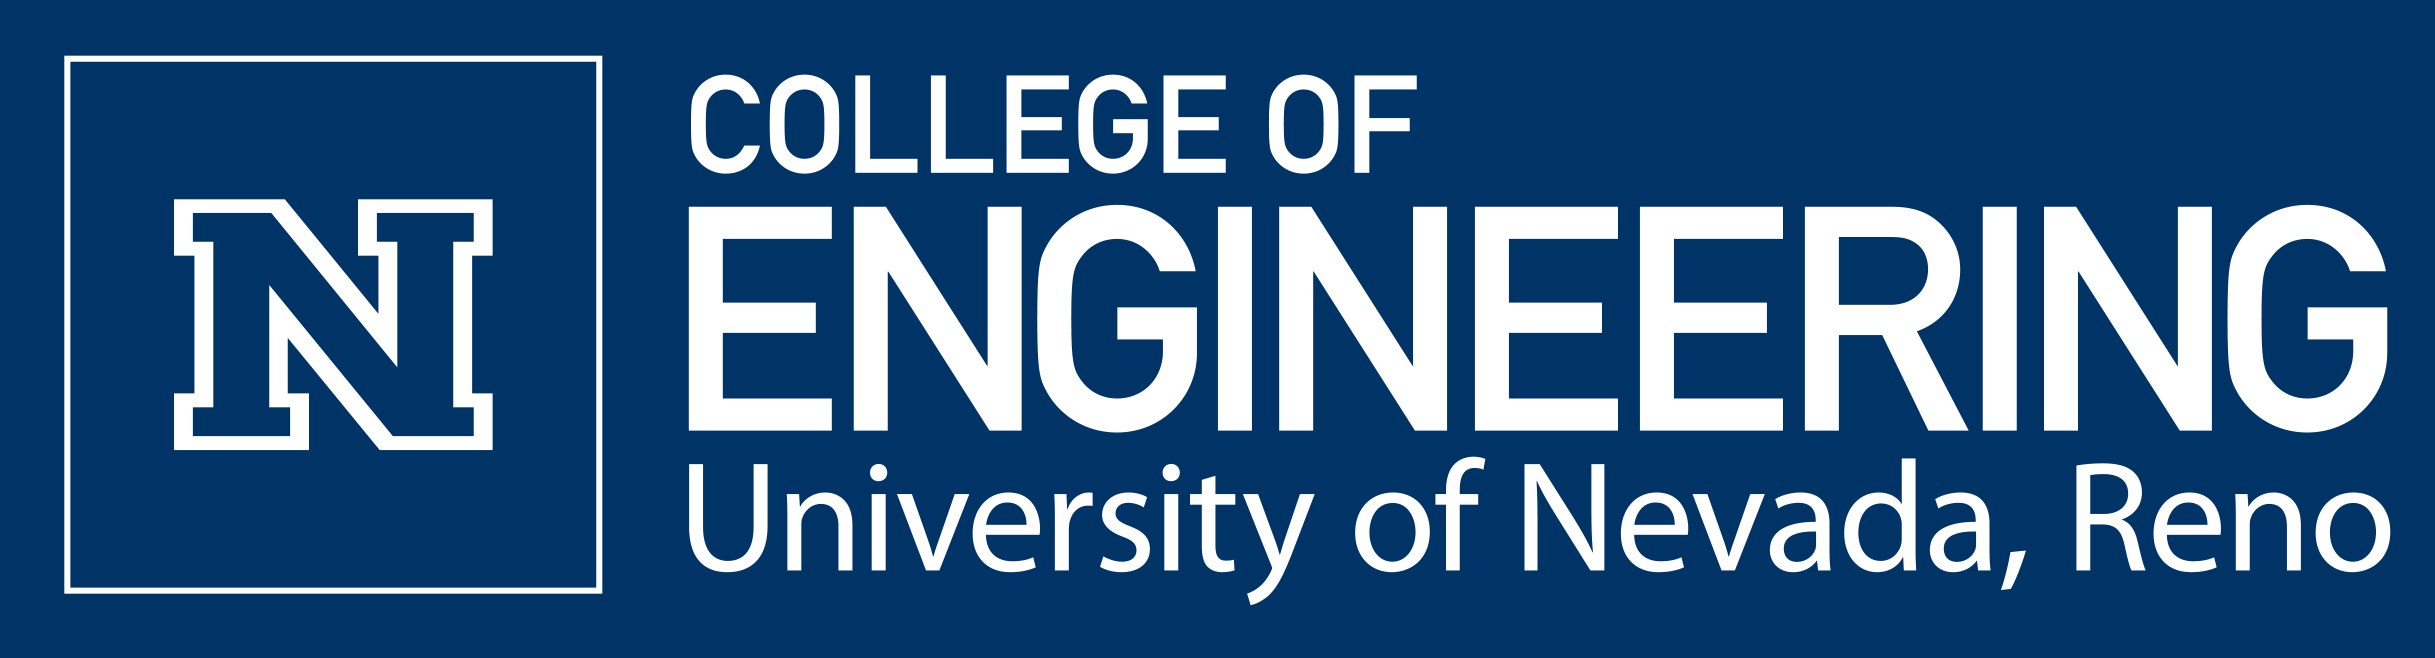 College_of_Engineering